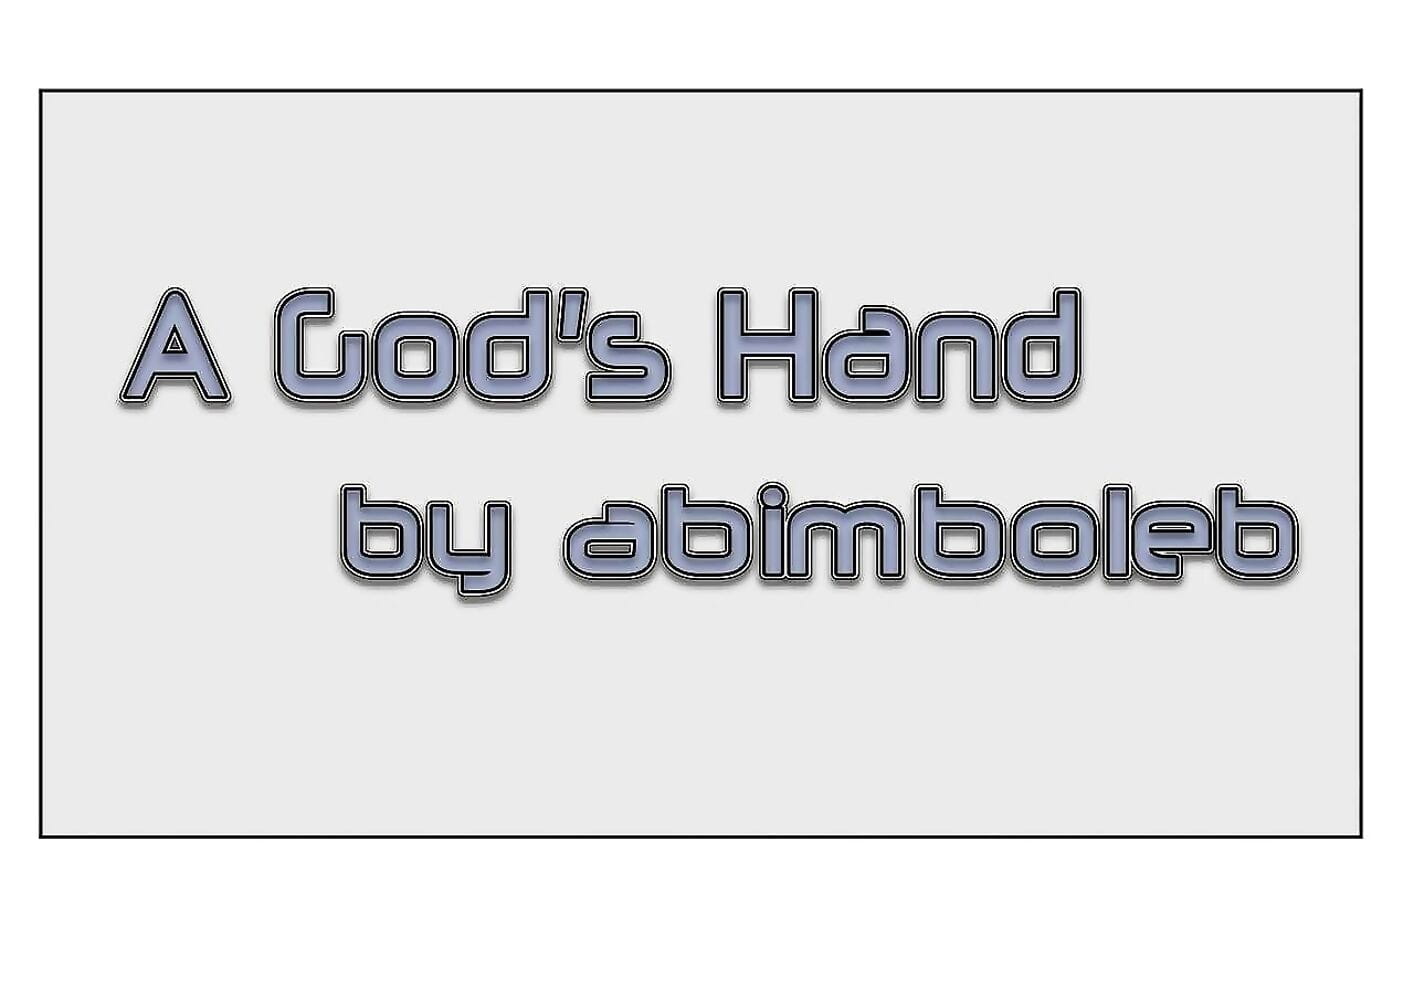 abimboleb a 神々 手